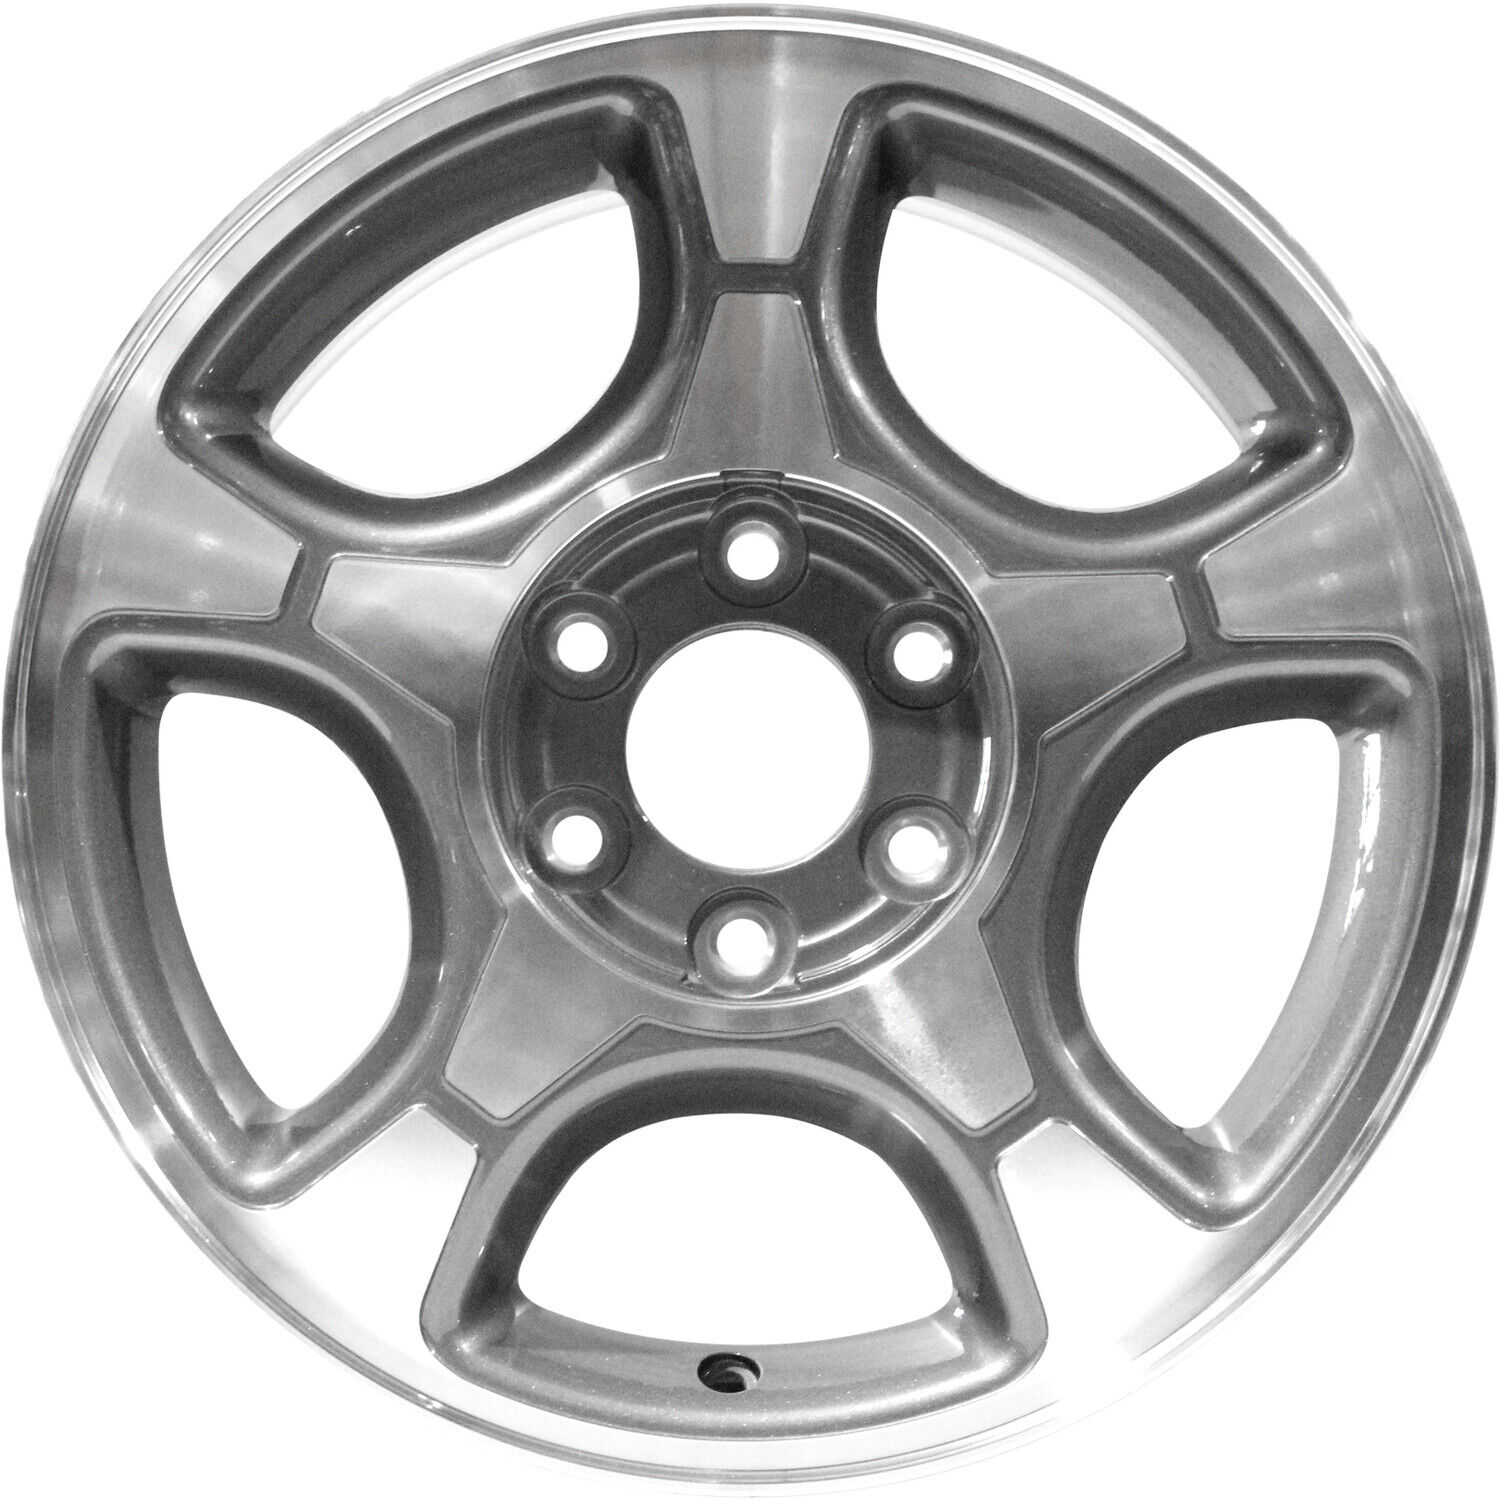 05170 Reconditioned OEM Aluminum Wheel 17x7 fits 2004-2009 Chevrolet Trailblazer